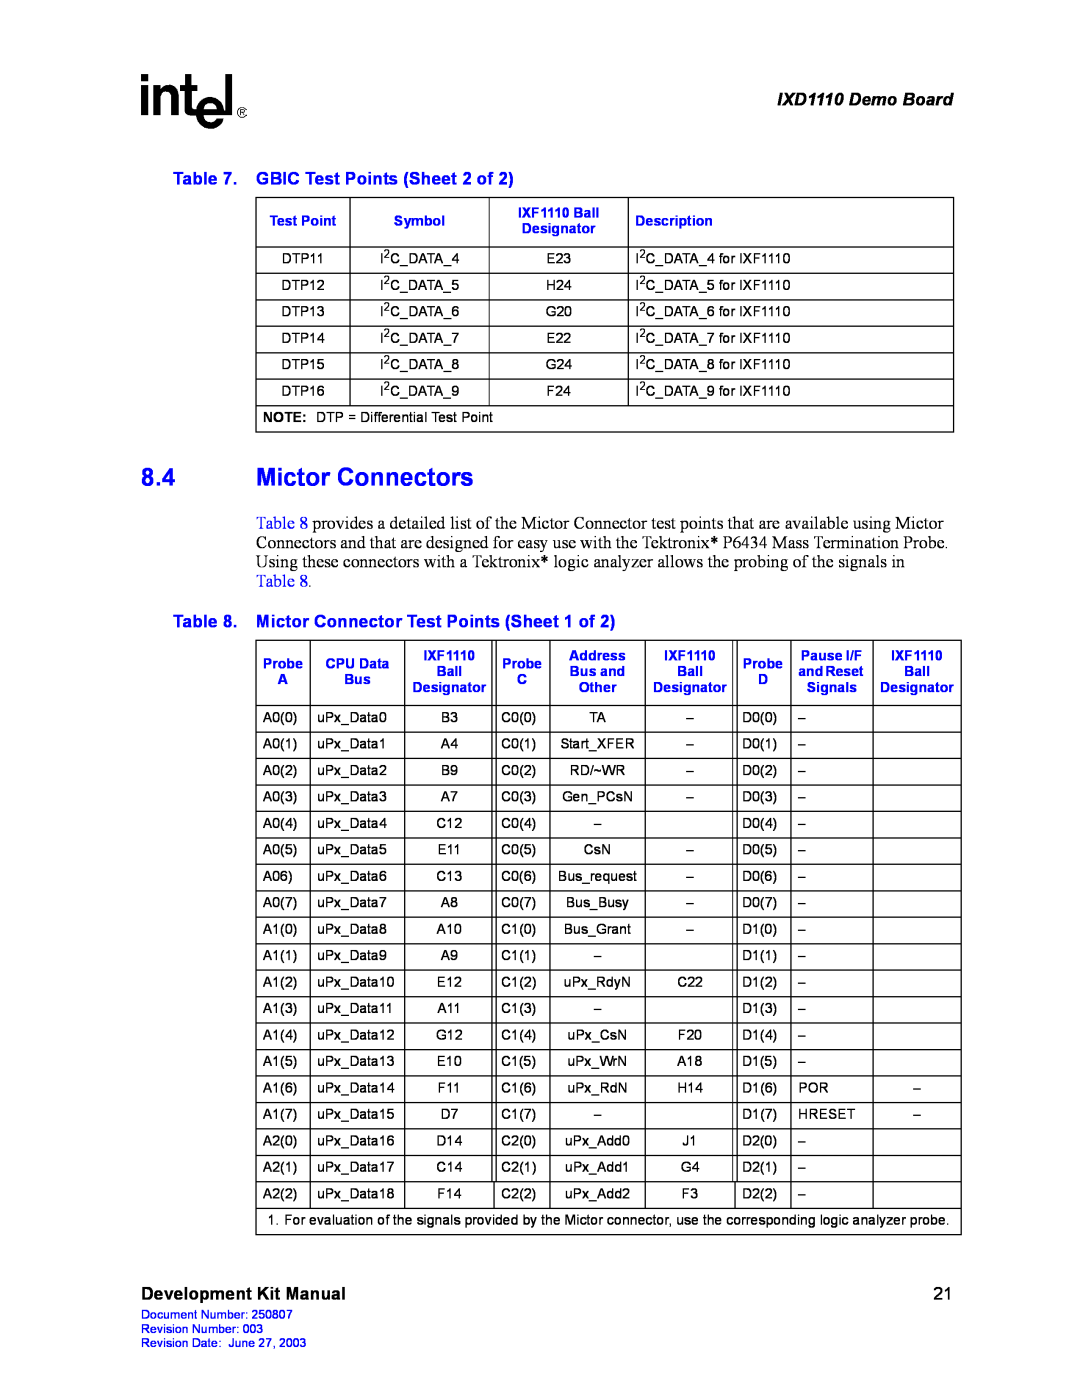 Intel manual Mictor Connectors, GBIC Test Points Sheet 2 of, Mictor Connector Test Points Sheet 1 of, IXD1110 Demo Board 